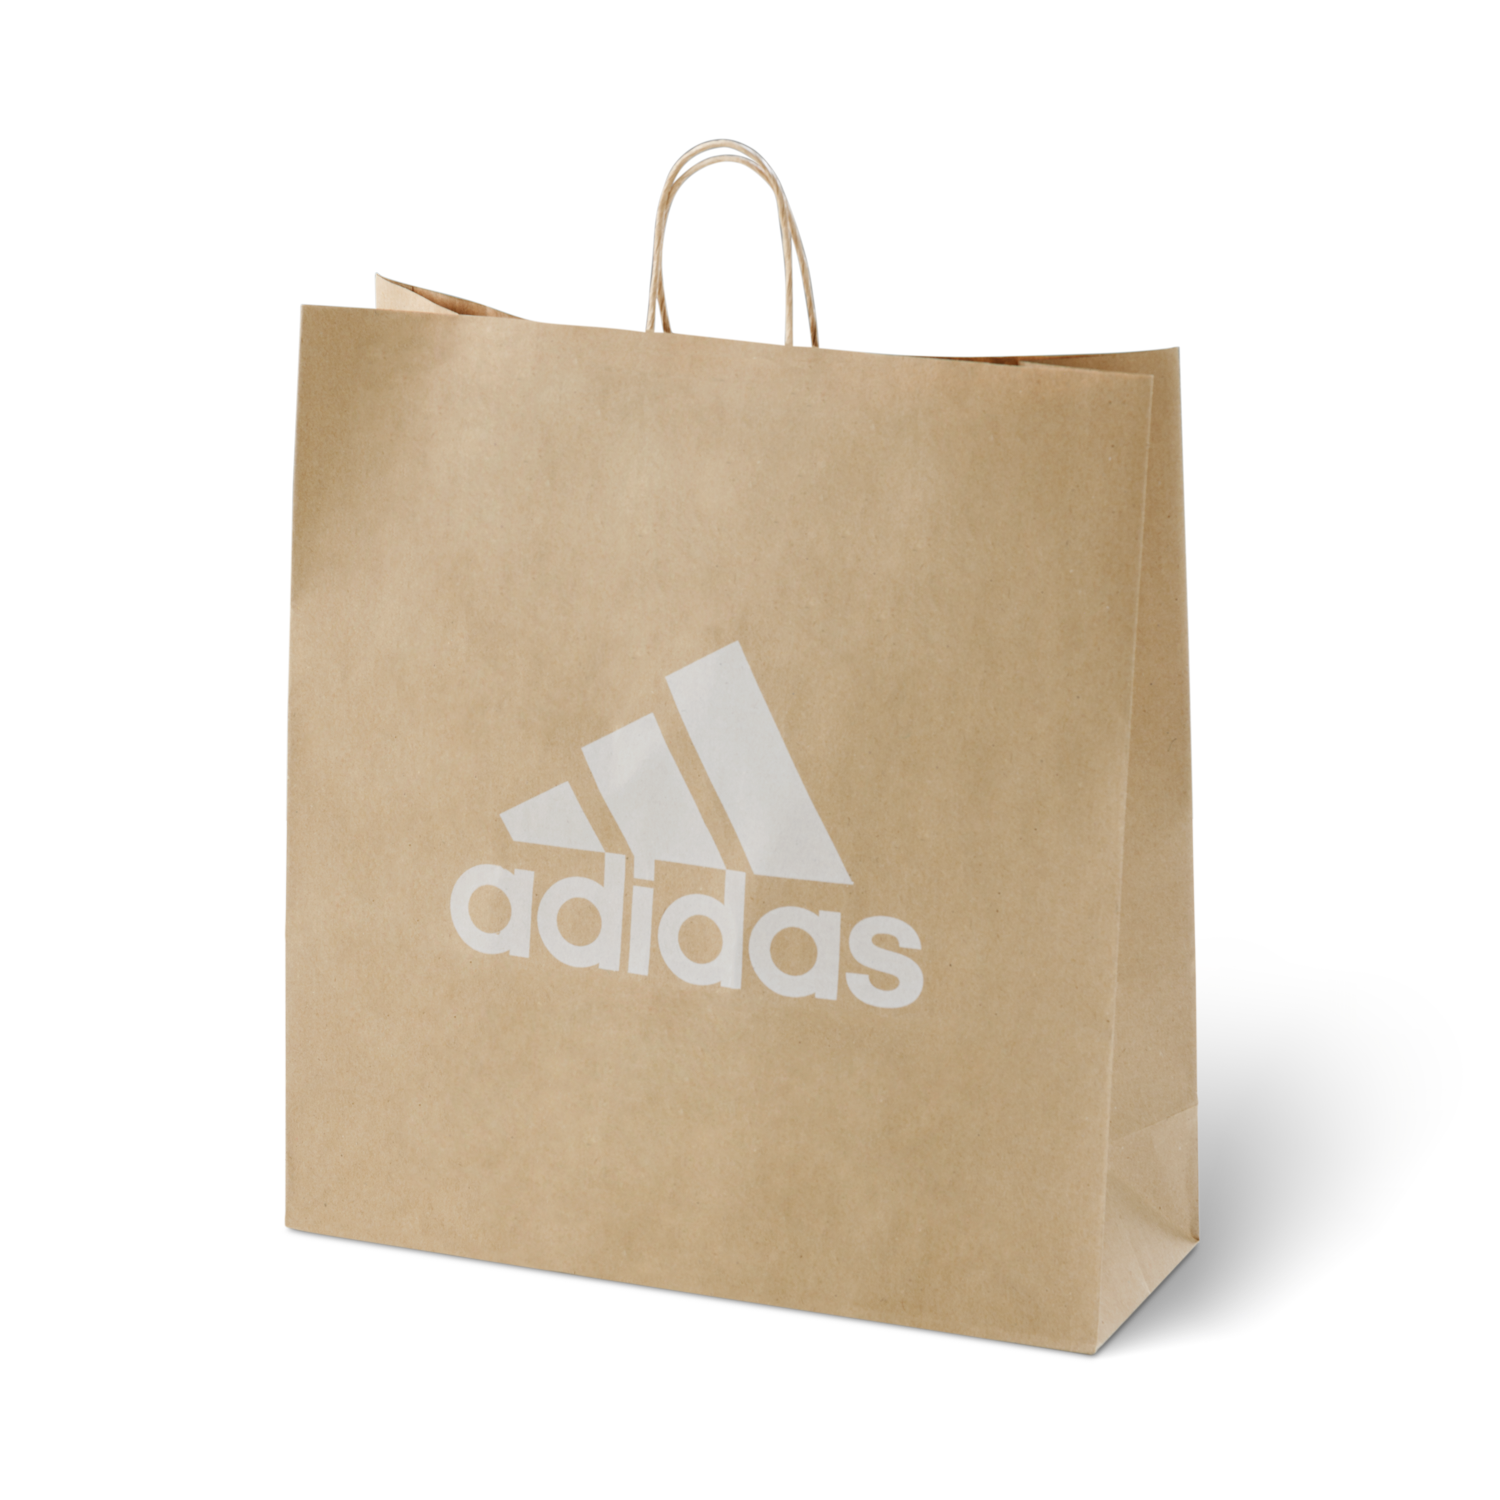 PaperPak Gallery Adidas Bag